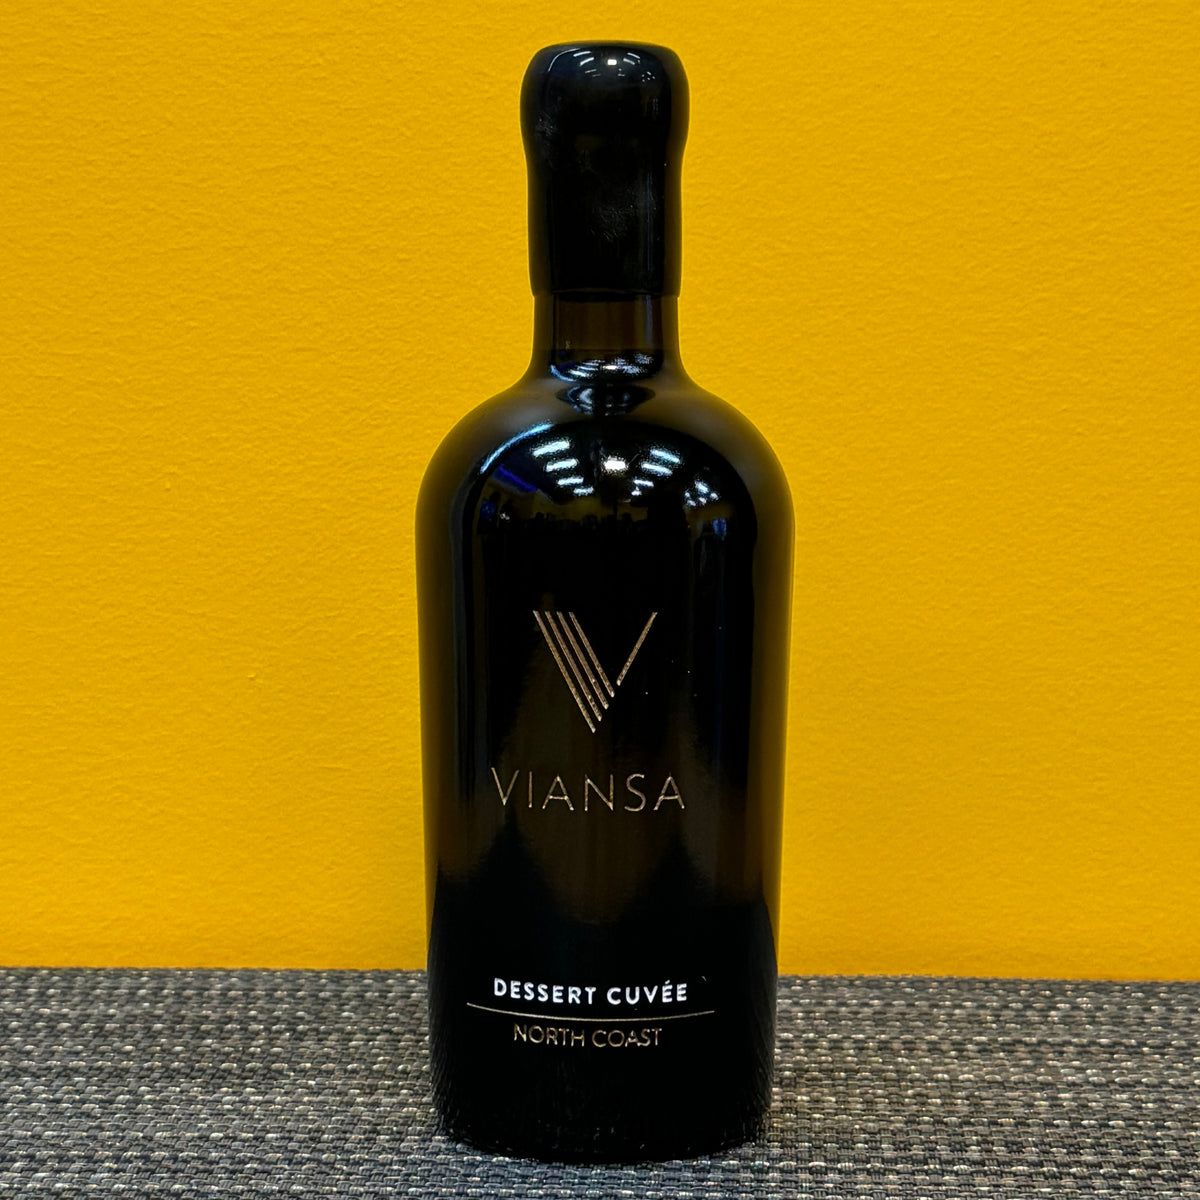 A bottle of Viansa Dessert Cuvee sweet wine